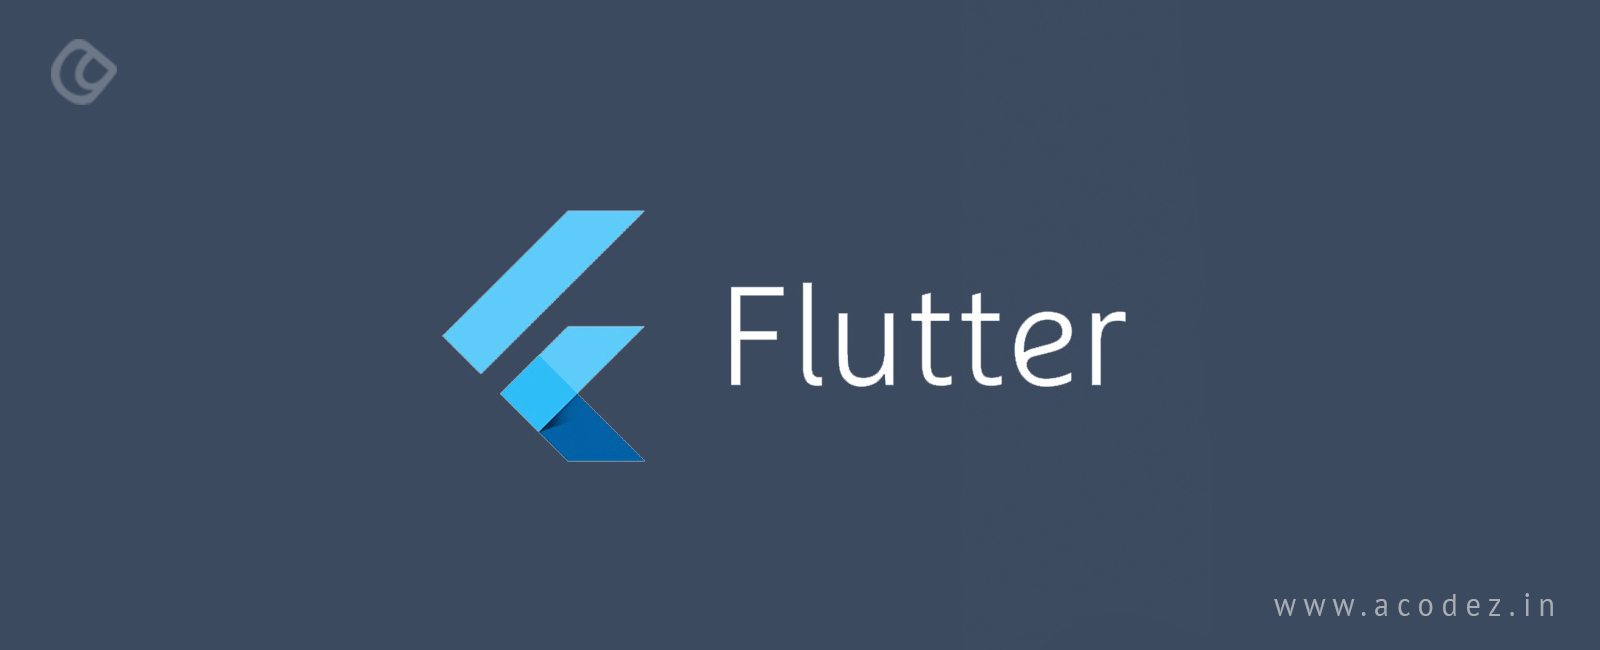 Top 9 Advantages of Flutter: Benefits of App Development in 2021